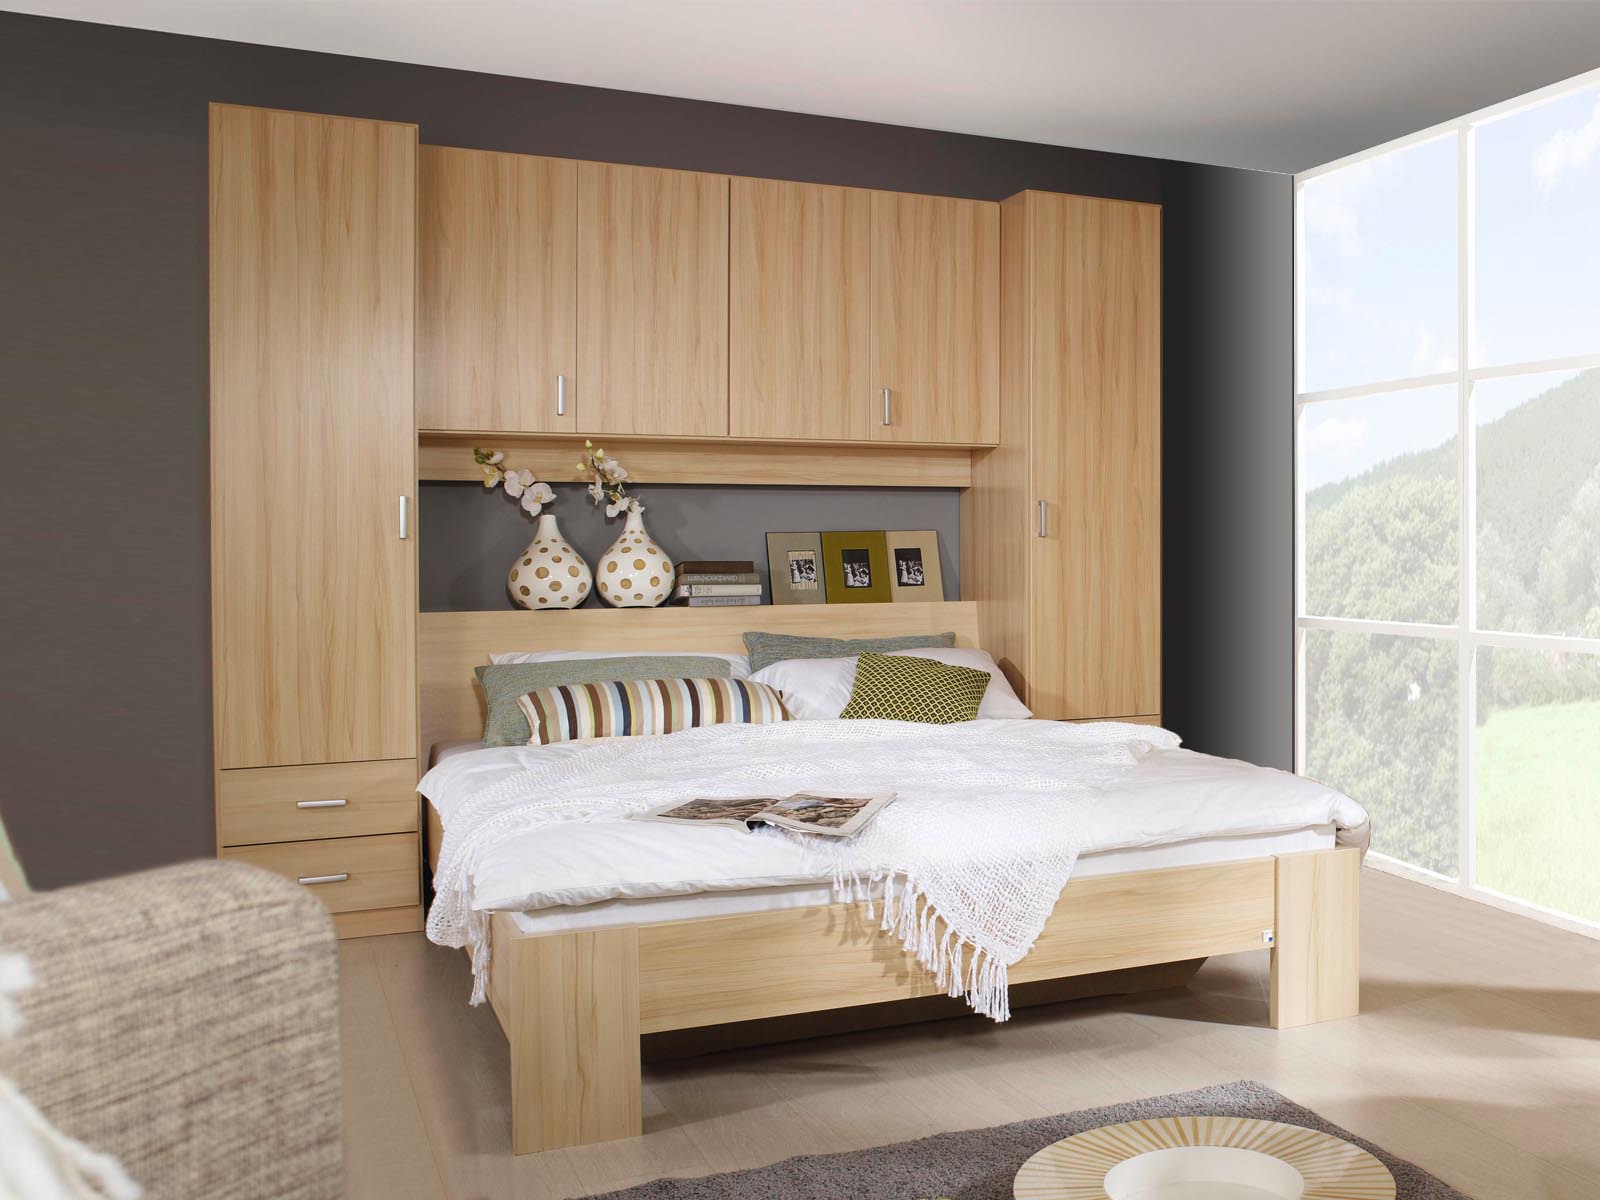 Tête de lit design - IKEA moderne avec rangement ...